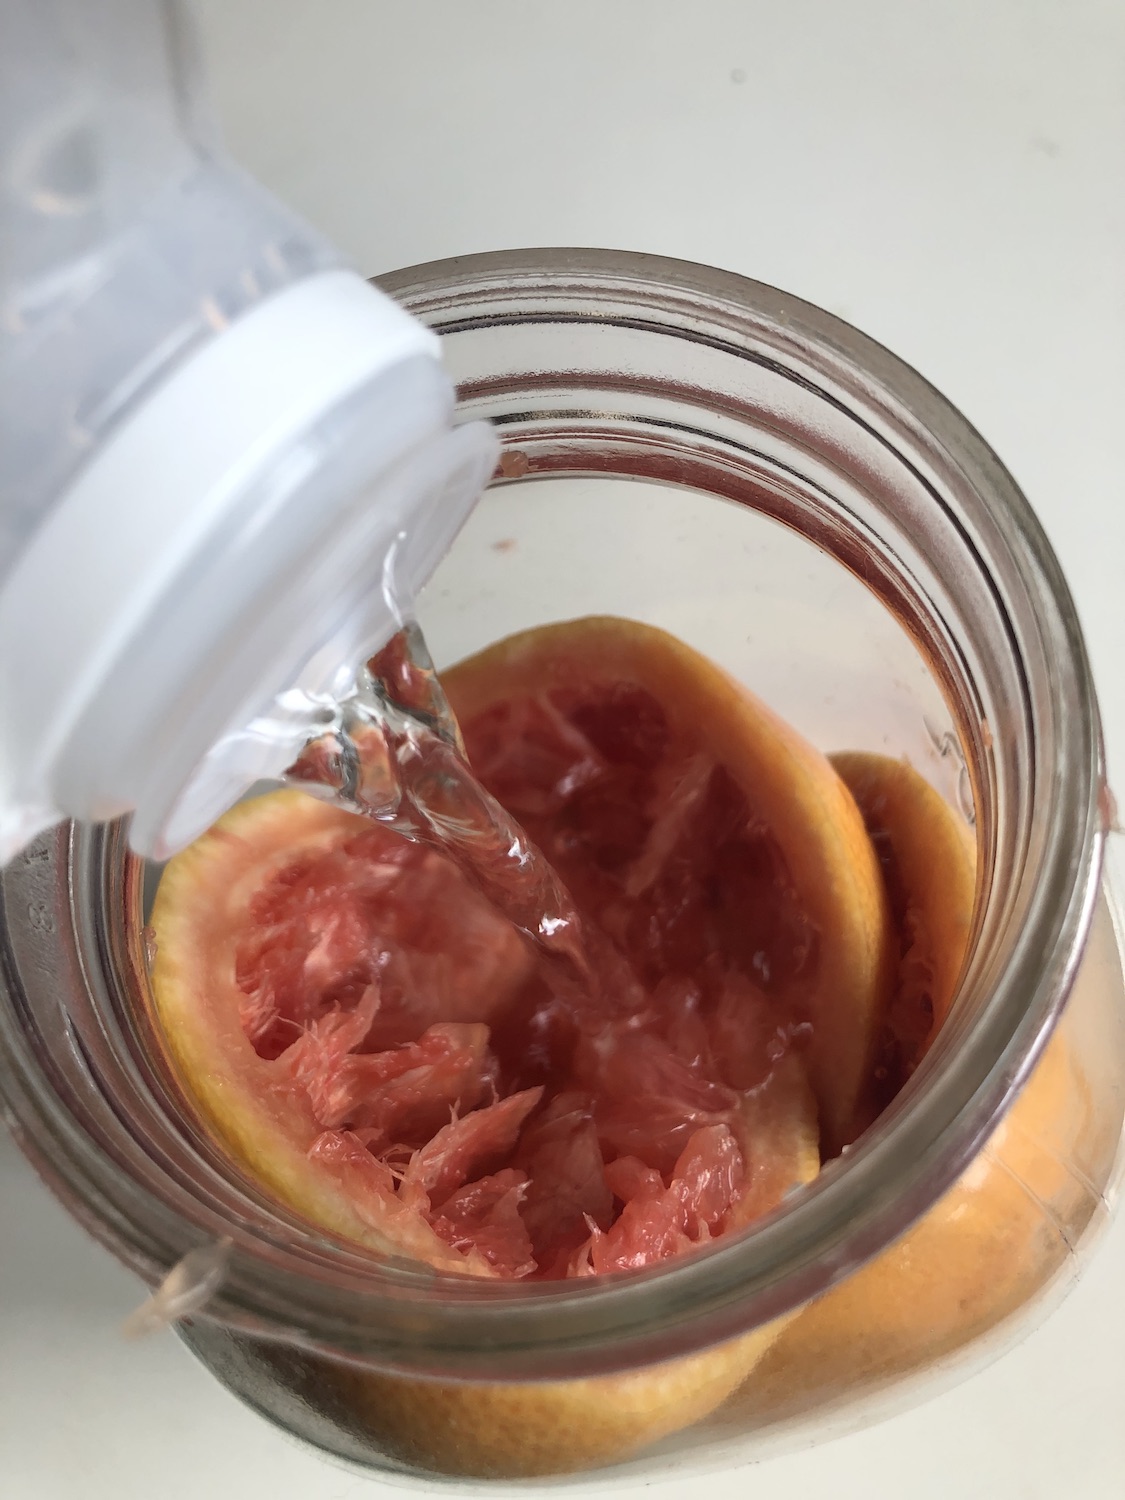 citrus vinegar all purpose cleaner spray pouring white vinegar into glass jar